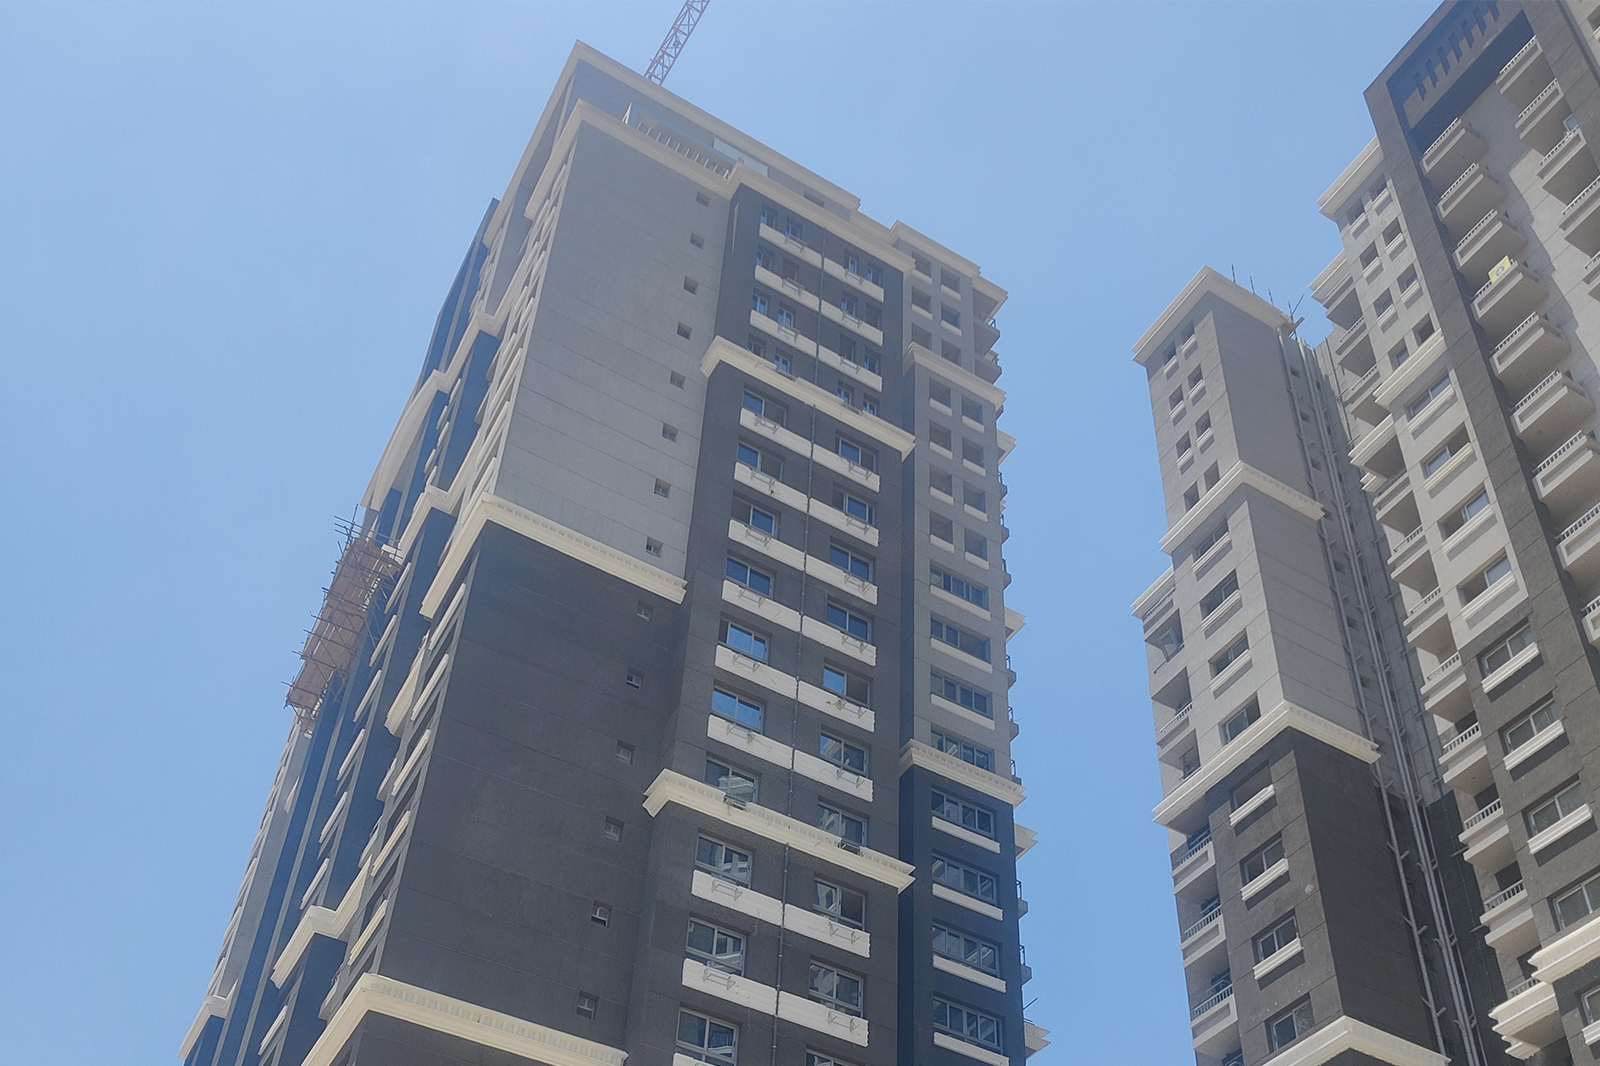 Maspero Nile Heightsconstructions